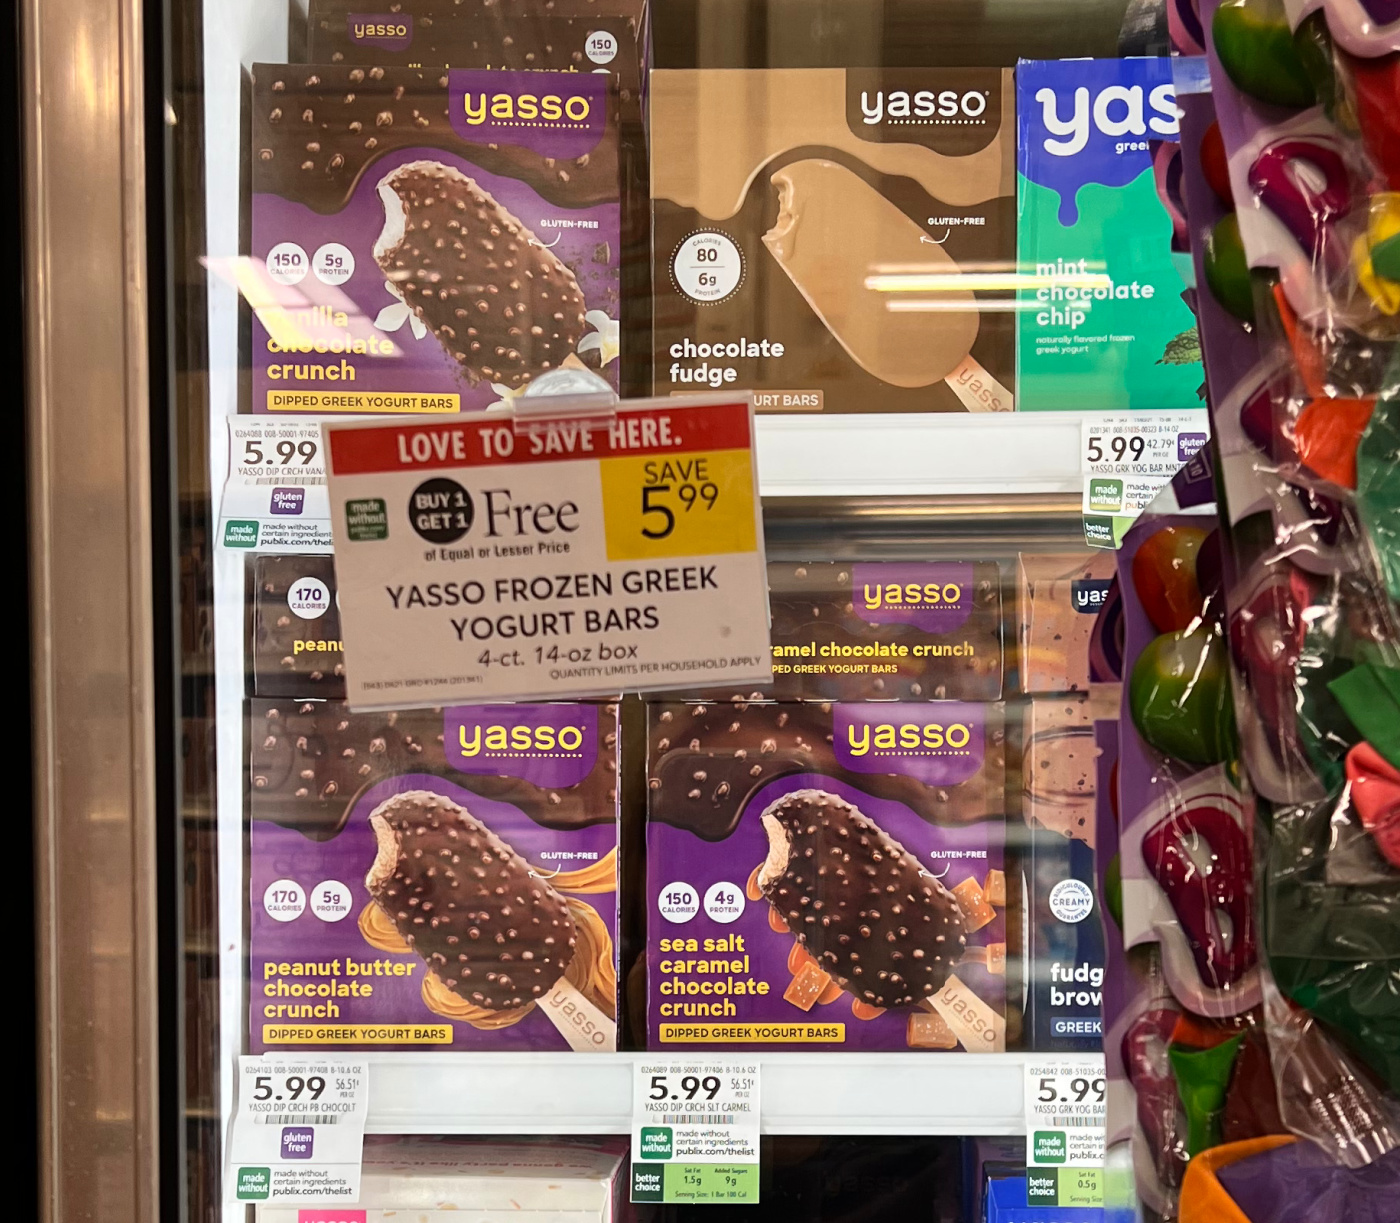 Yasso Chocolate Crunch Frozen Greek Yogurt Bars Just $1.50 At Publix (Regular Price $5.99) on I Heart Publix 1